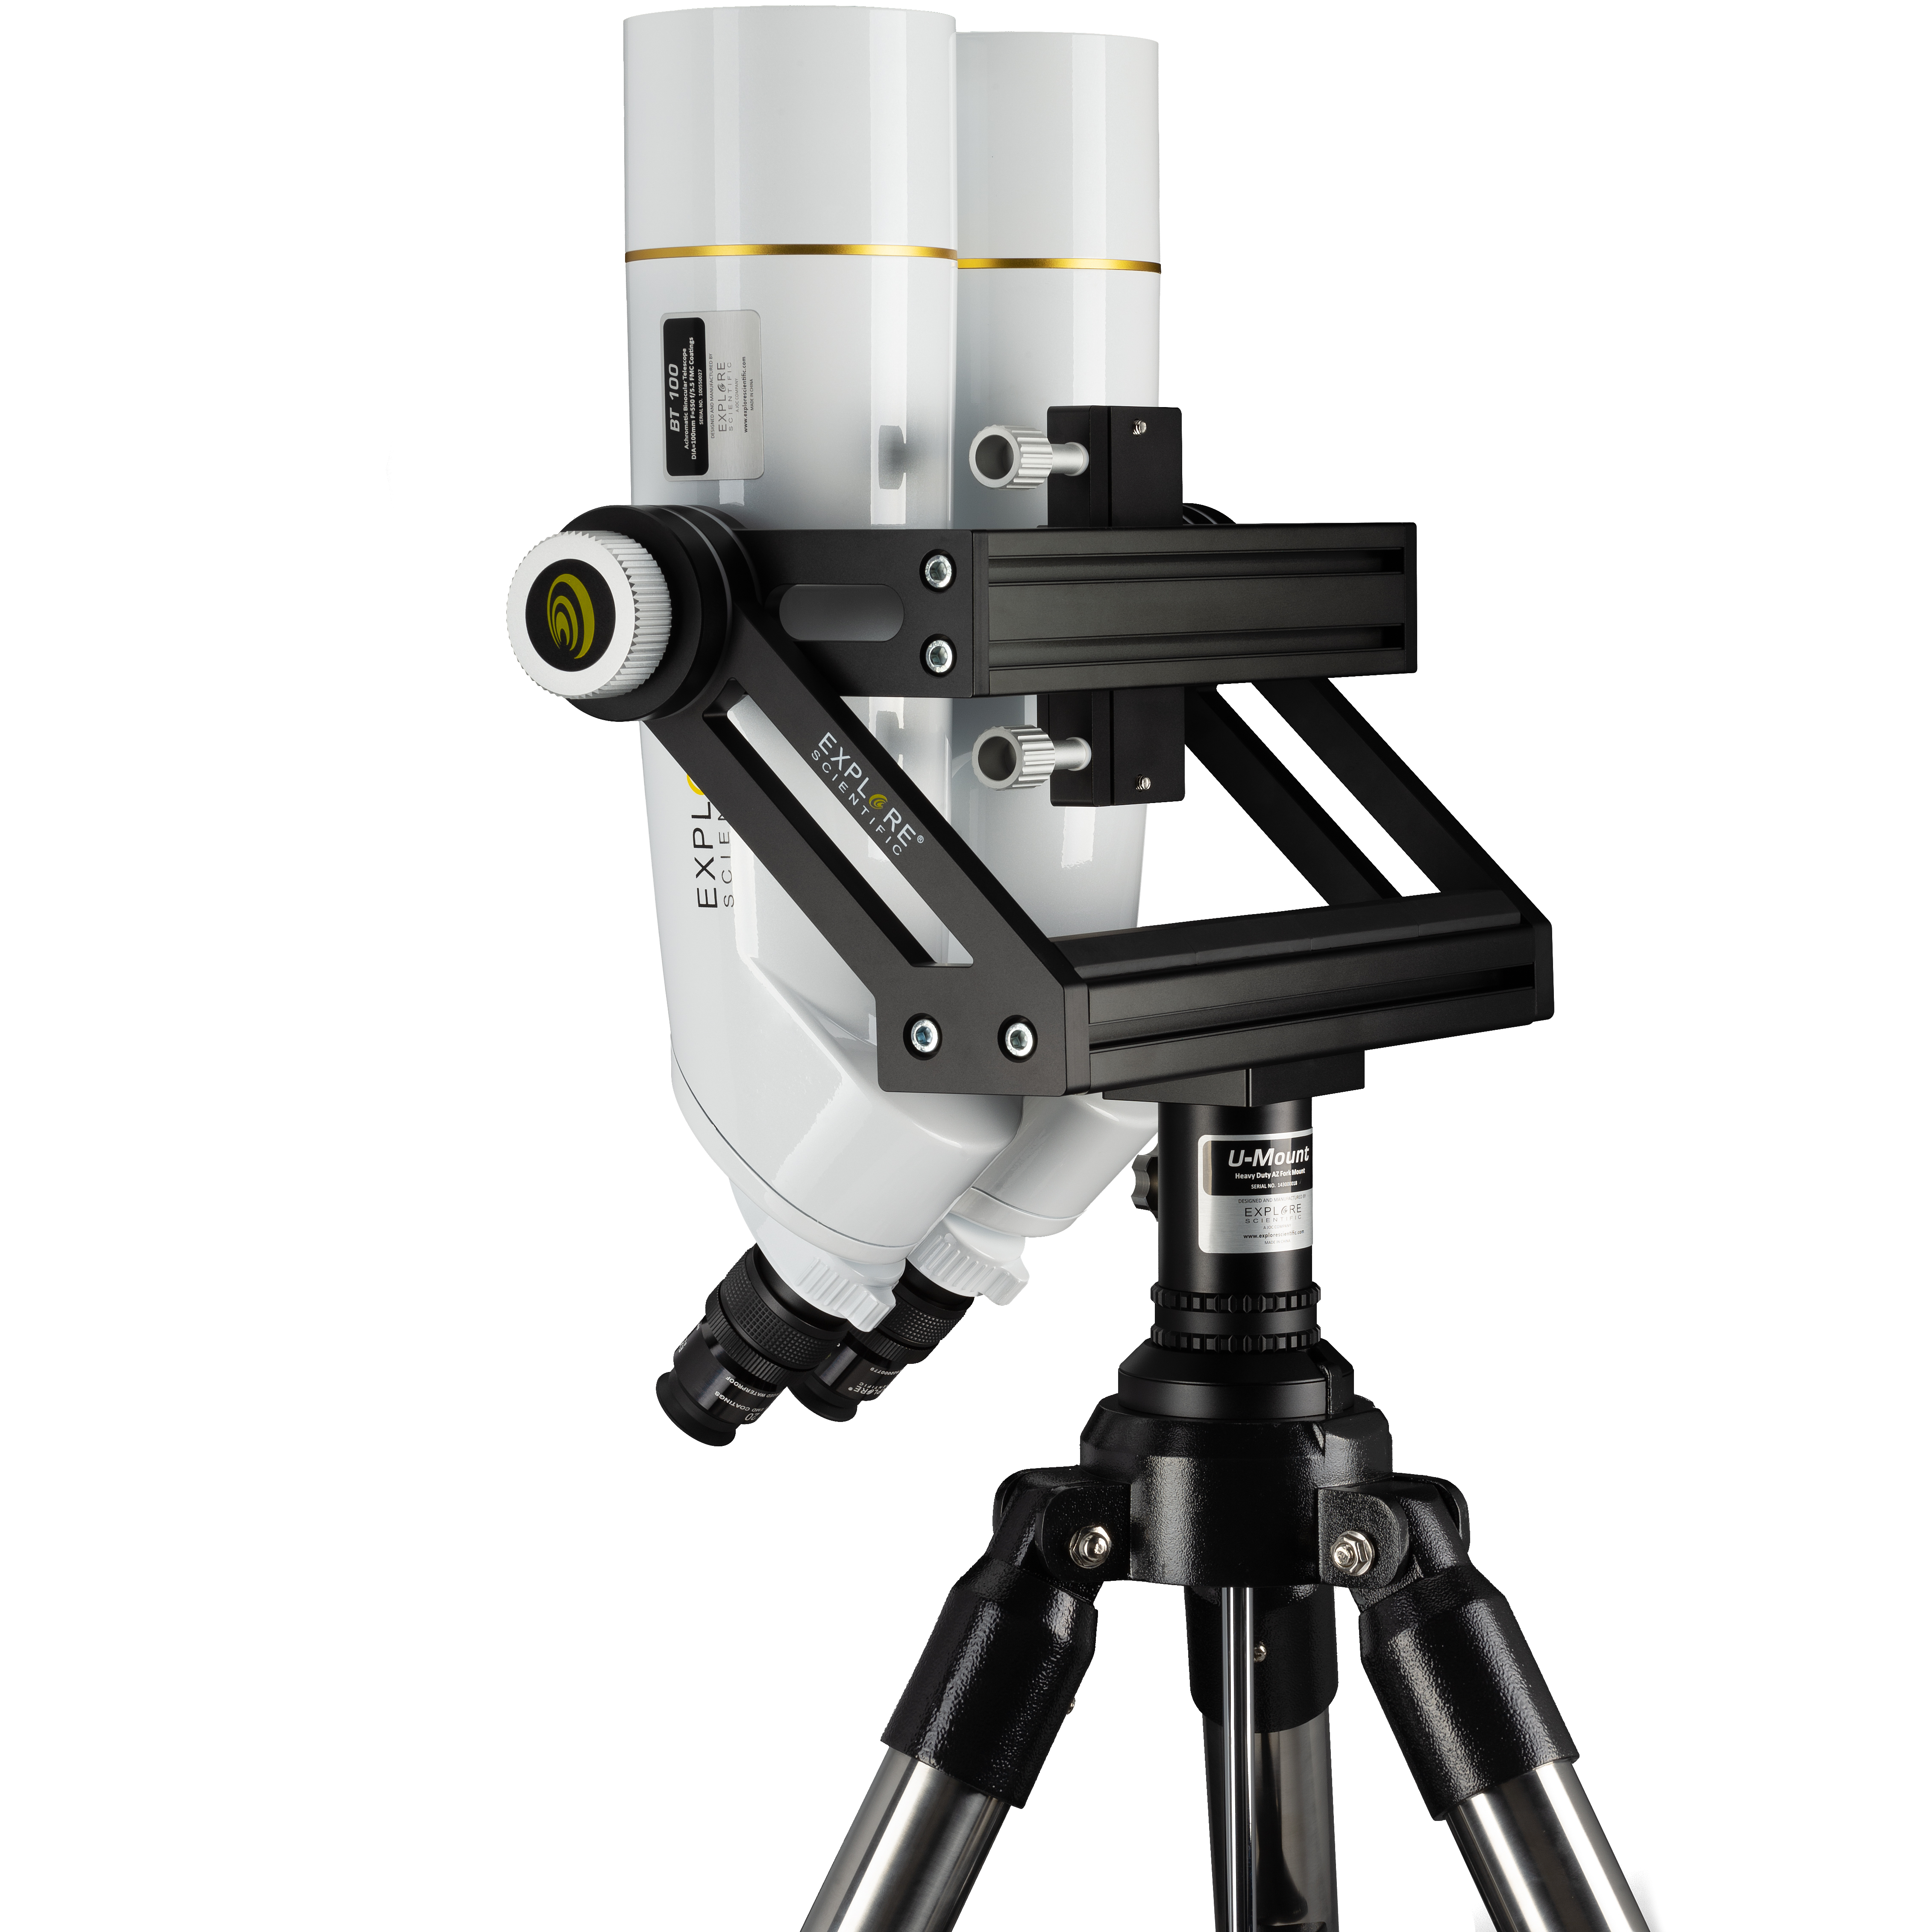 100 SCIENTIFIC mit 28, EXPLORE mm, LER Grad Okularen SF 62 20mm Teleskop BT-100